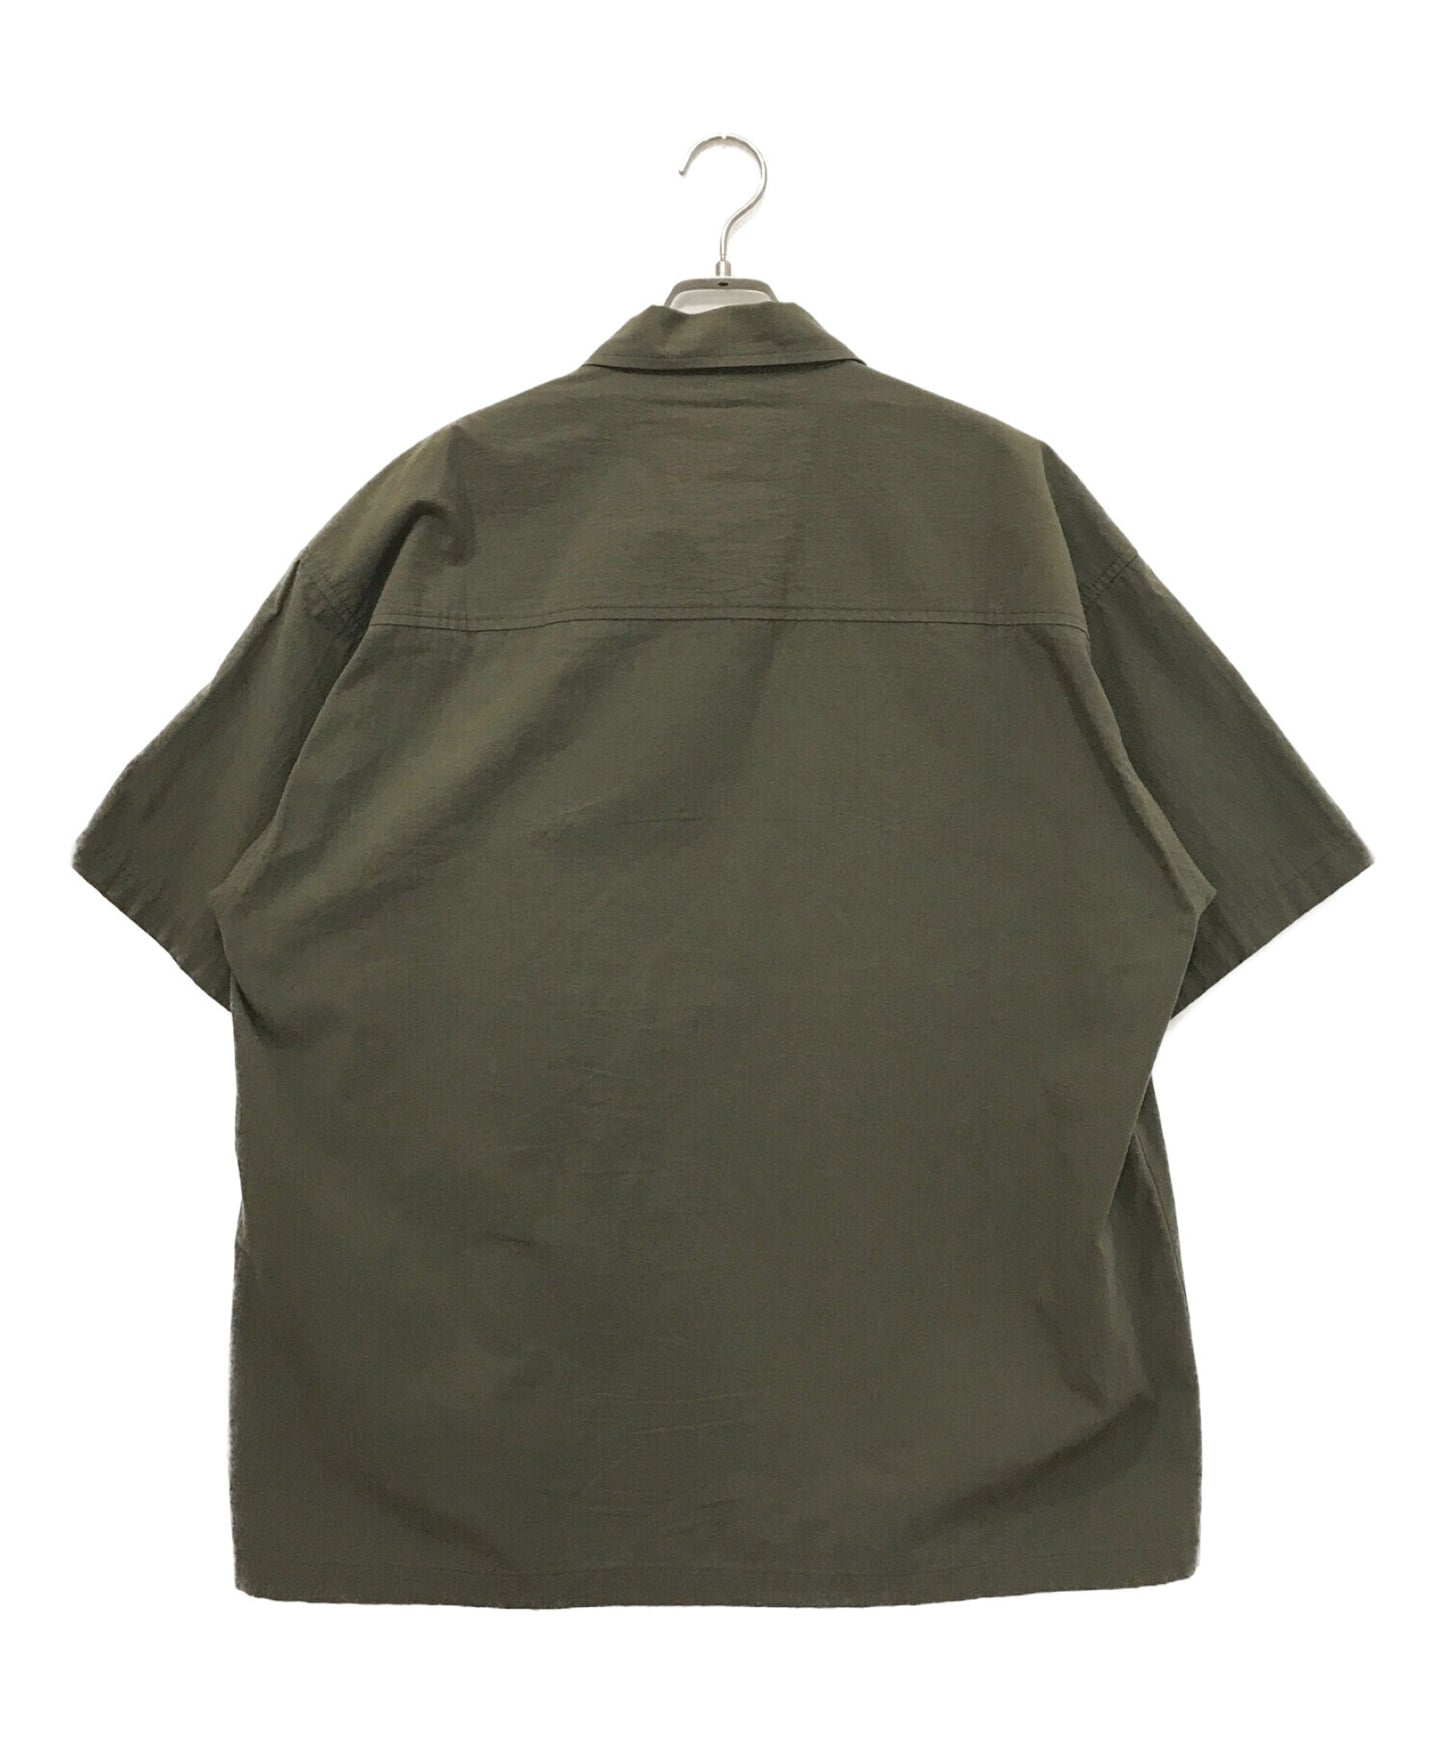 WTAPS短袖EXP衬衫221WVDT-SHM07